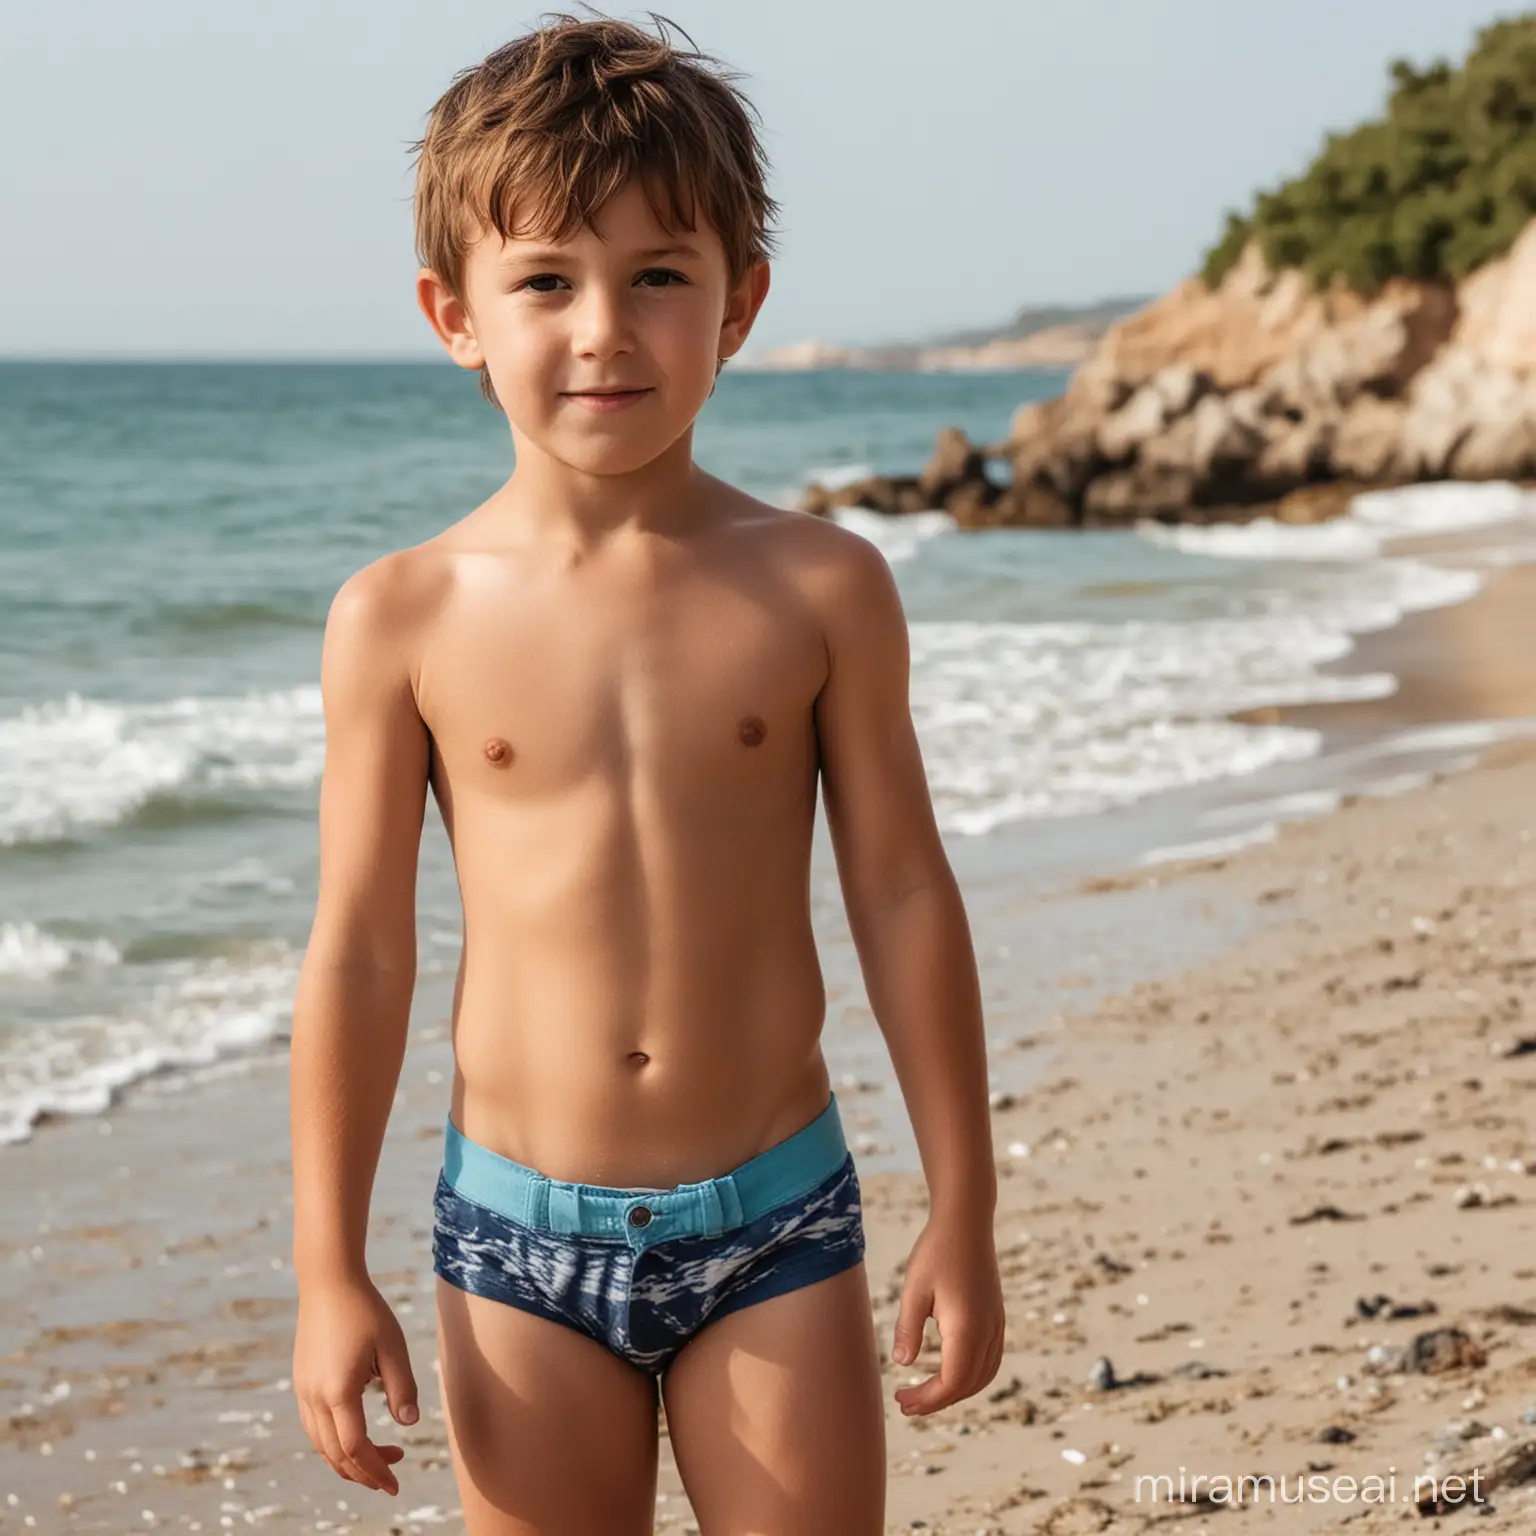 Shirtless Young Boy Enjoying Sunny Beach Day